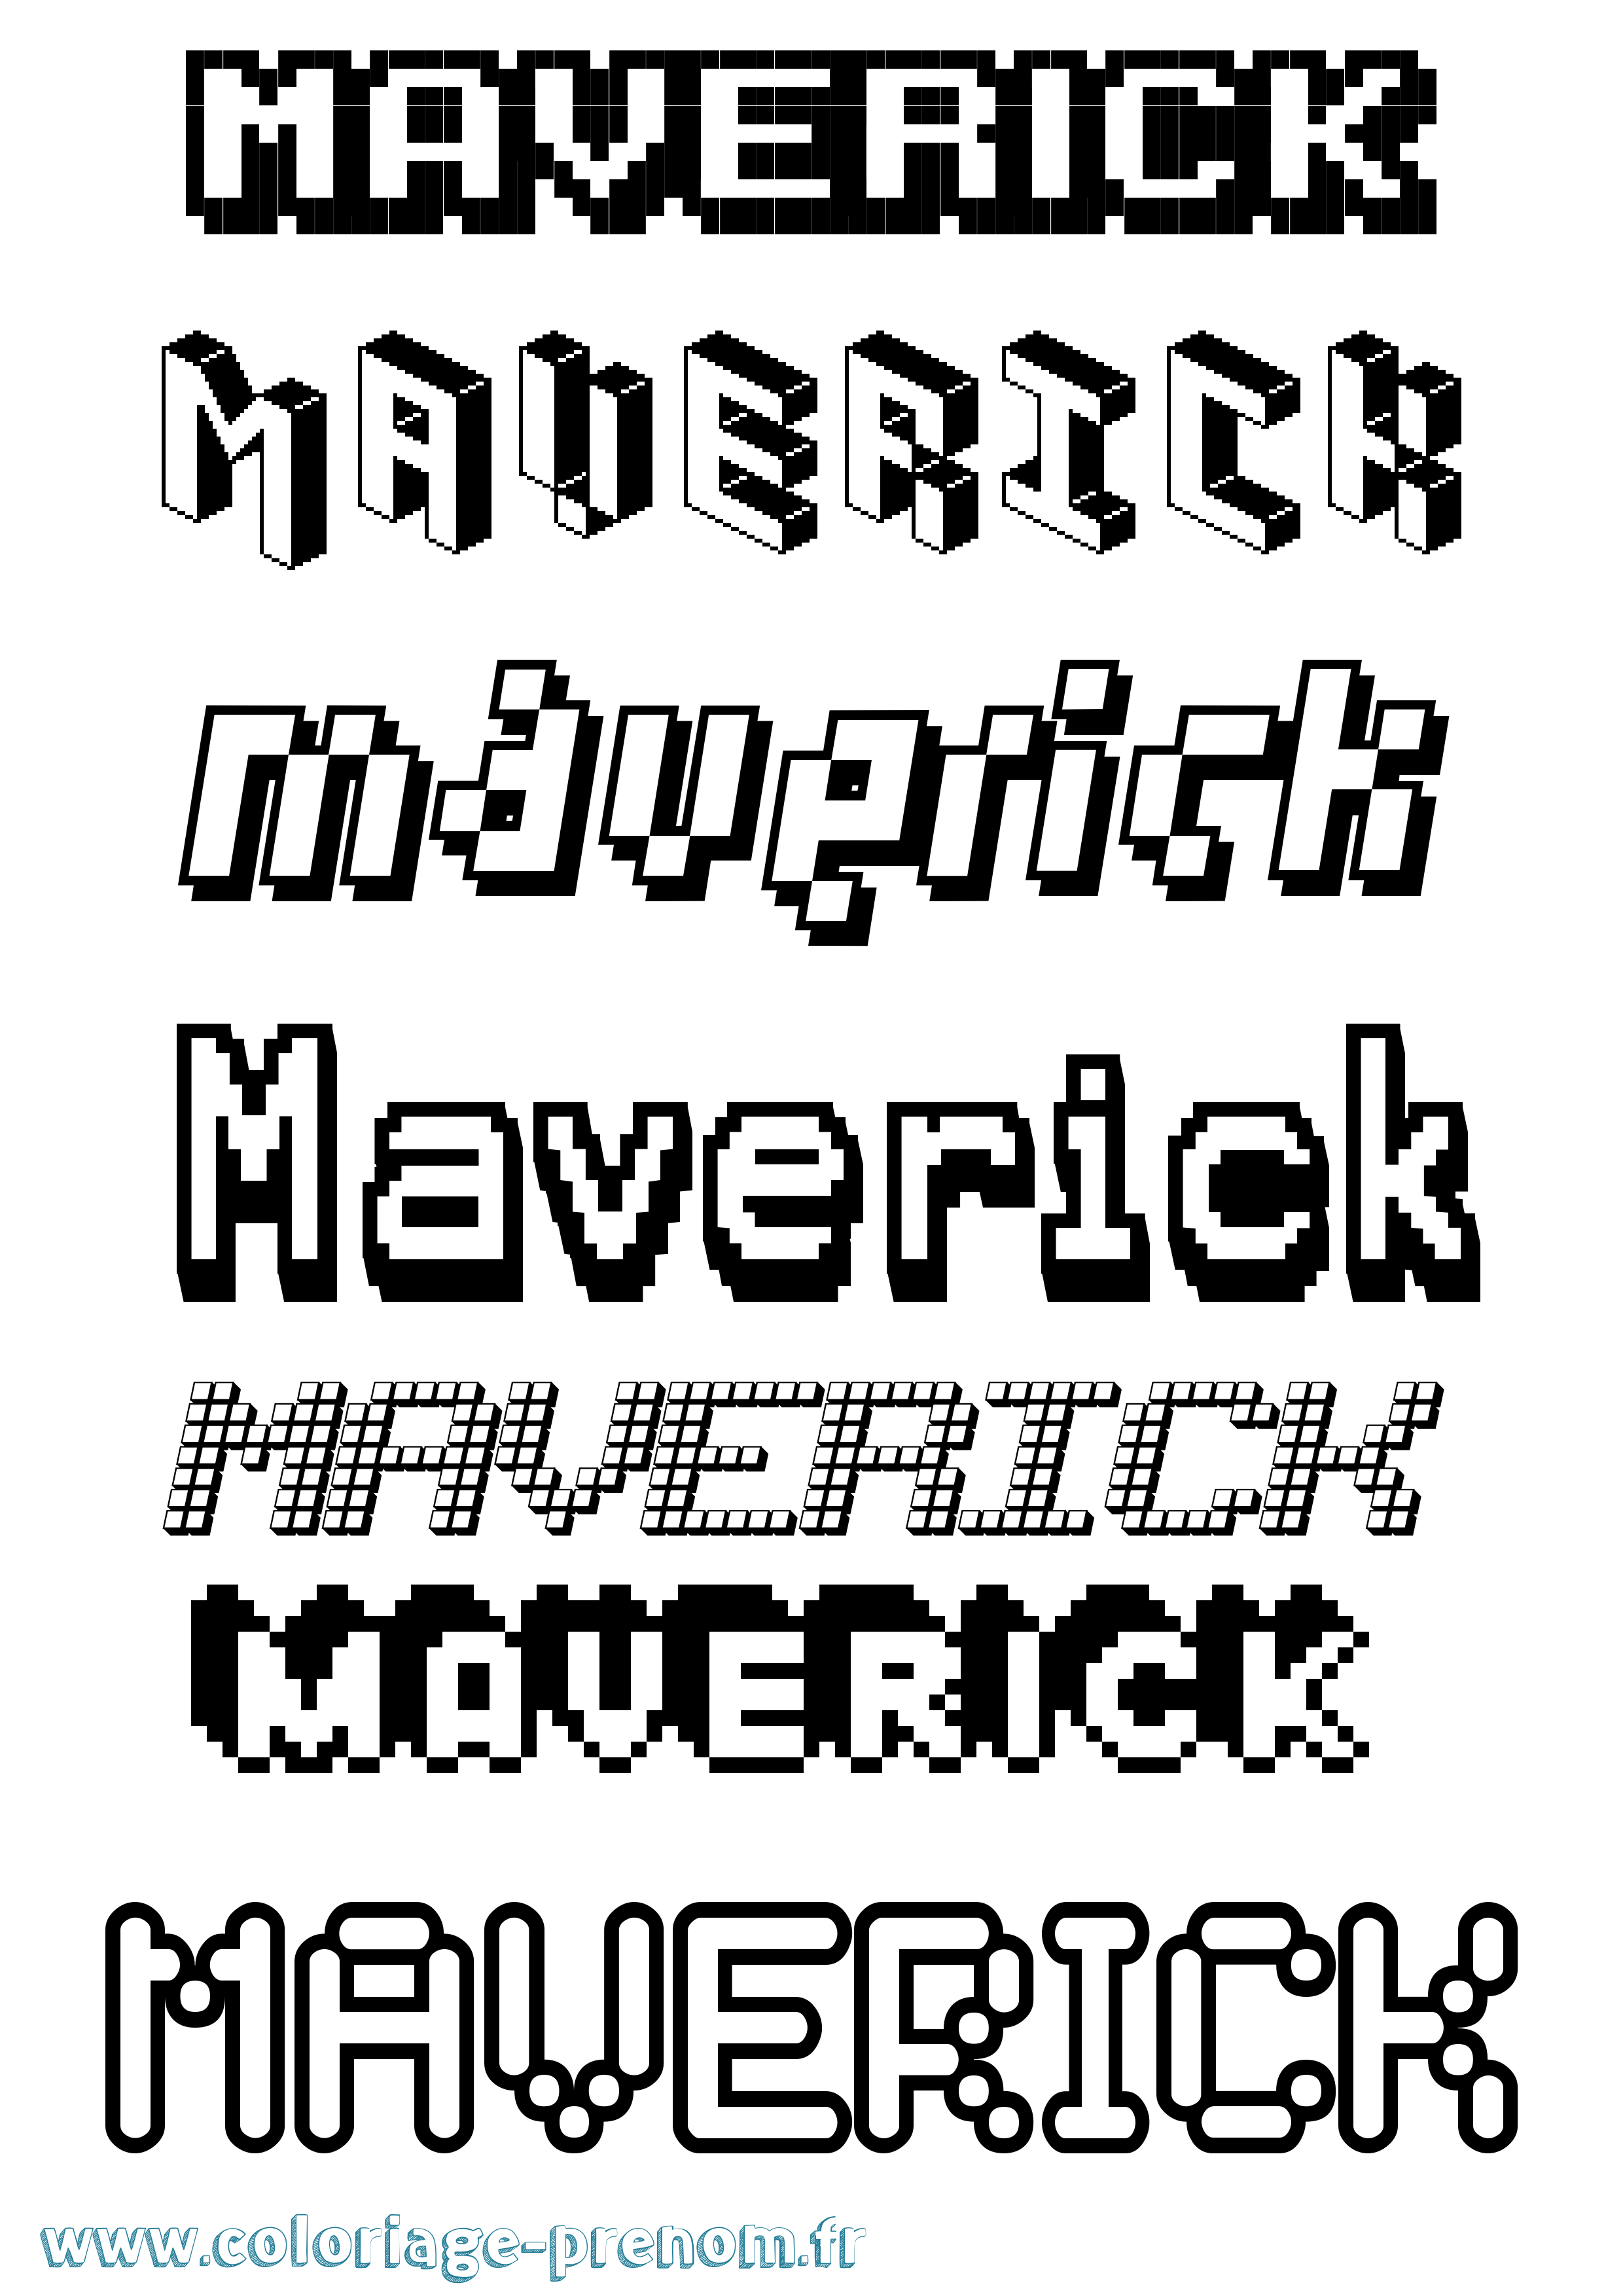 Coloriage prénom Maverick Pixel